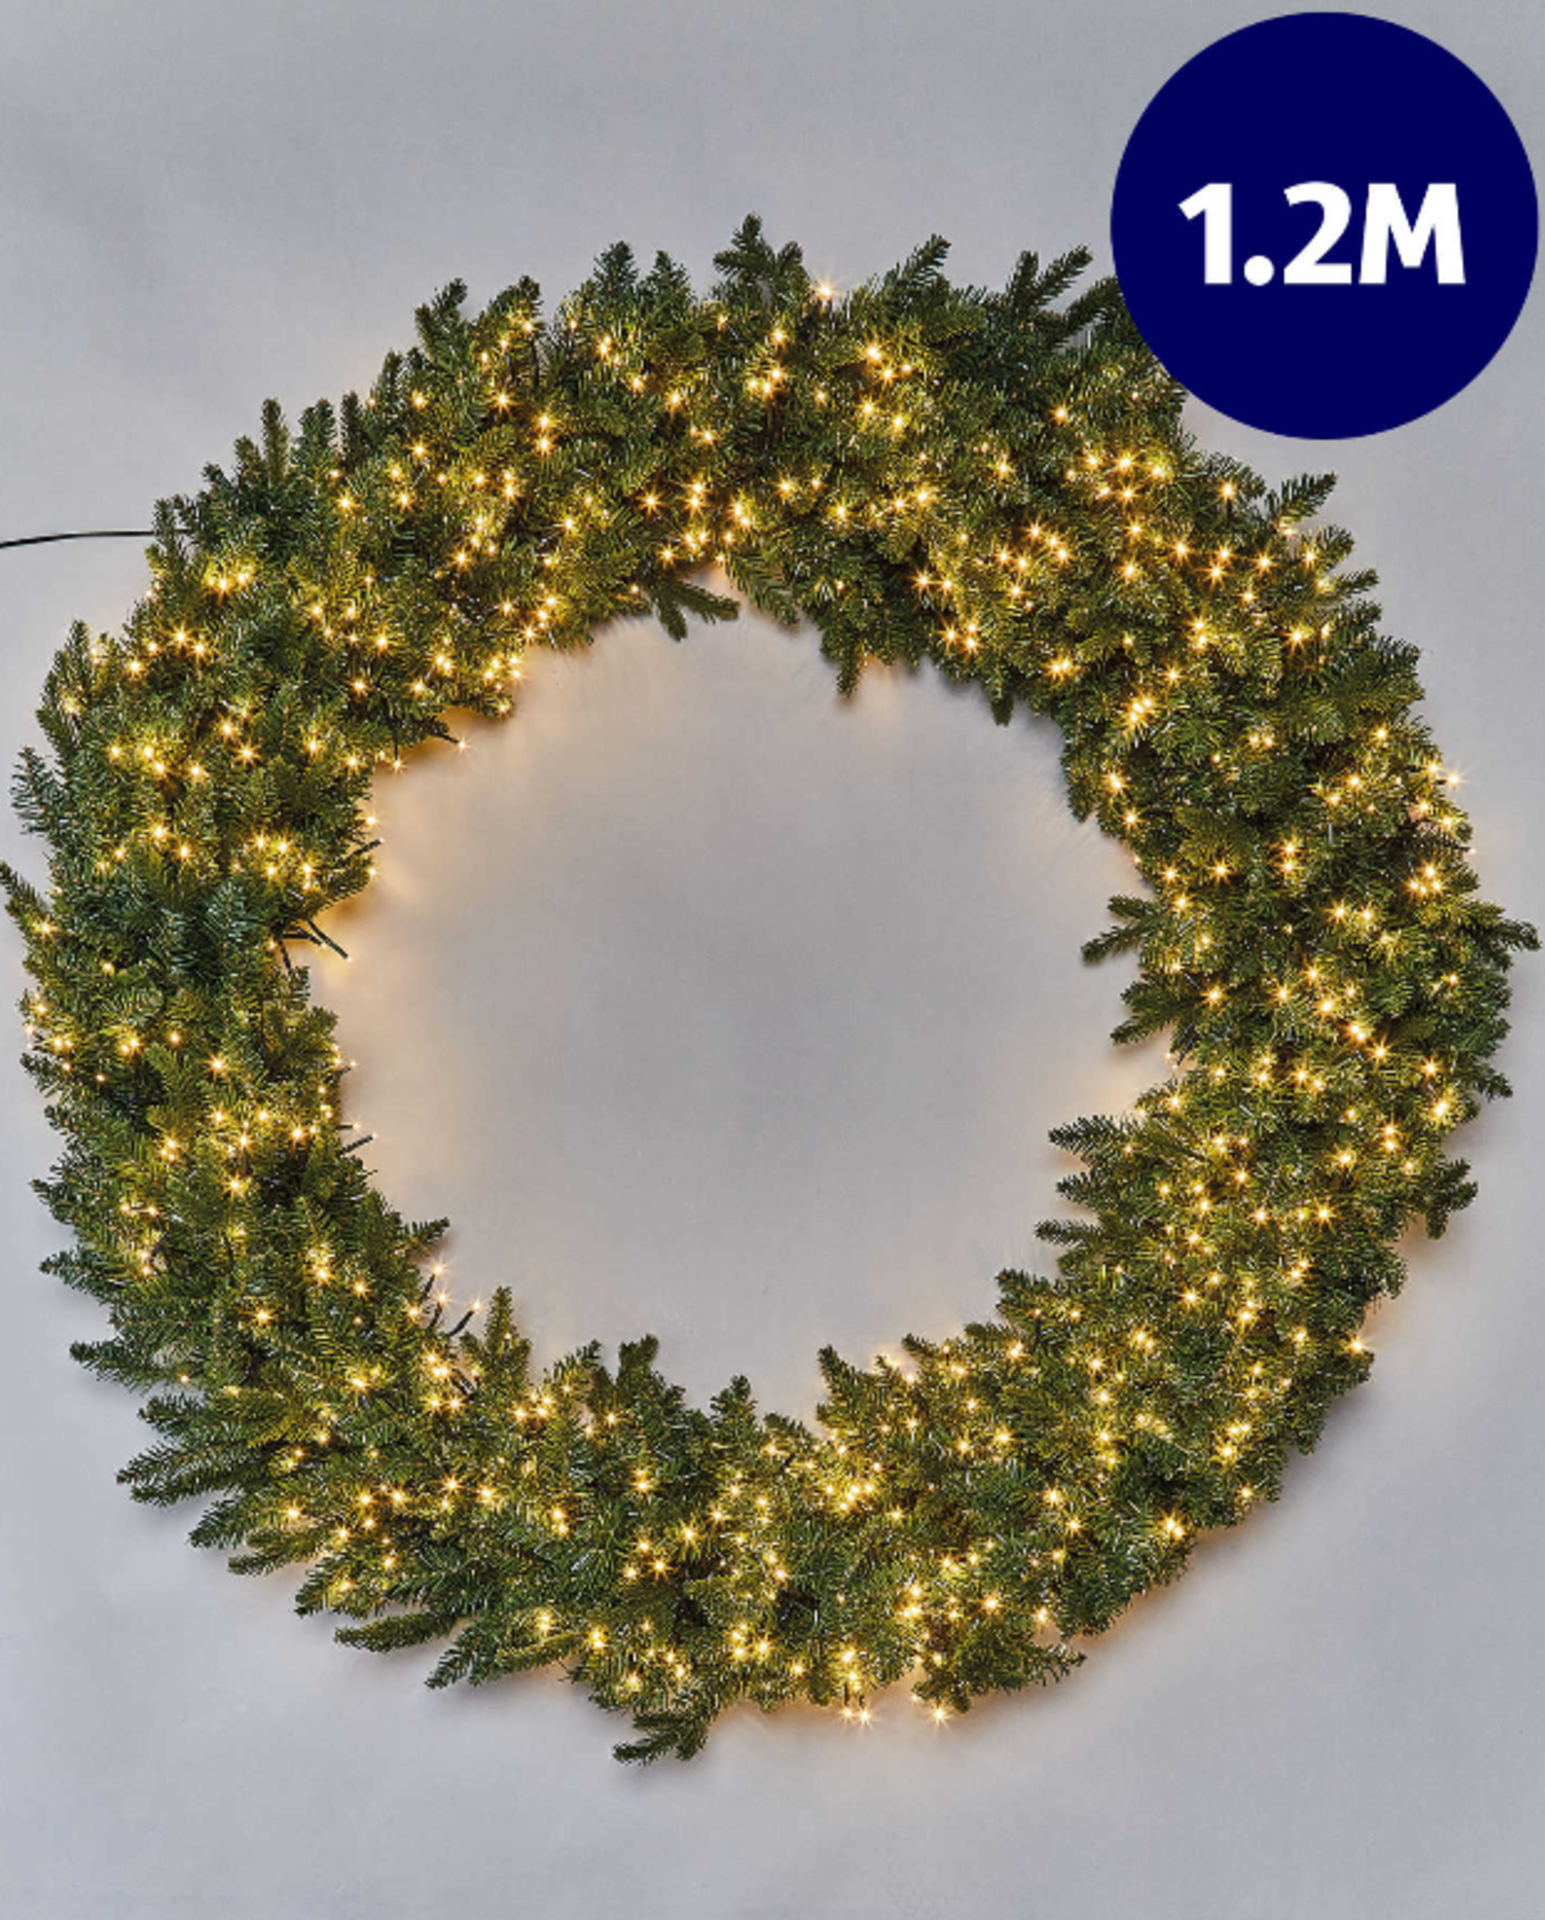 Stunning 1.2 Meter 1000 Led Pre-Lit Wreath *NO VAT* - Image 2 of 3